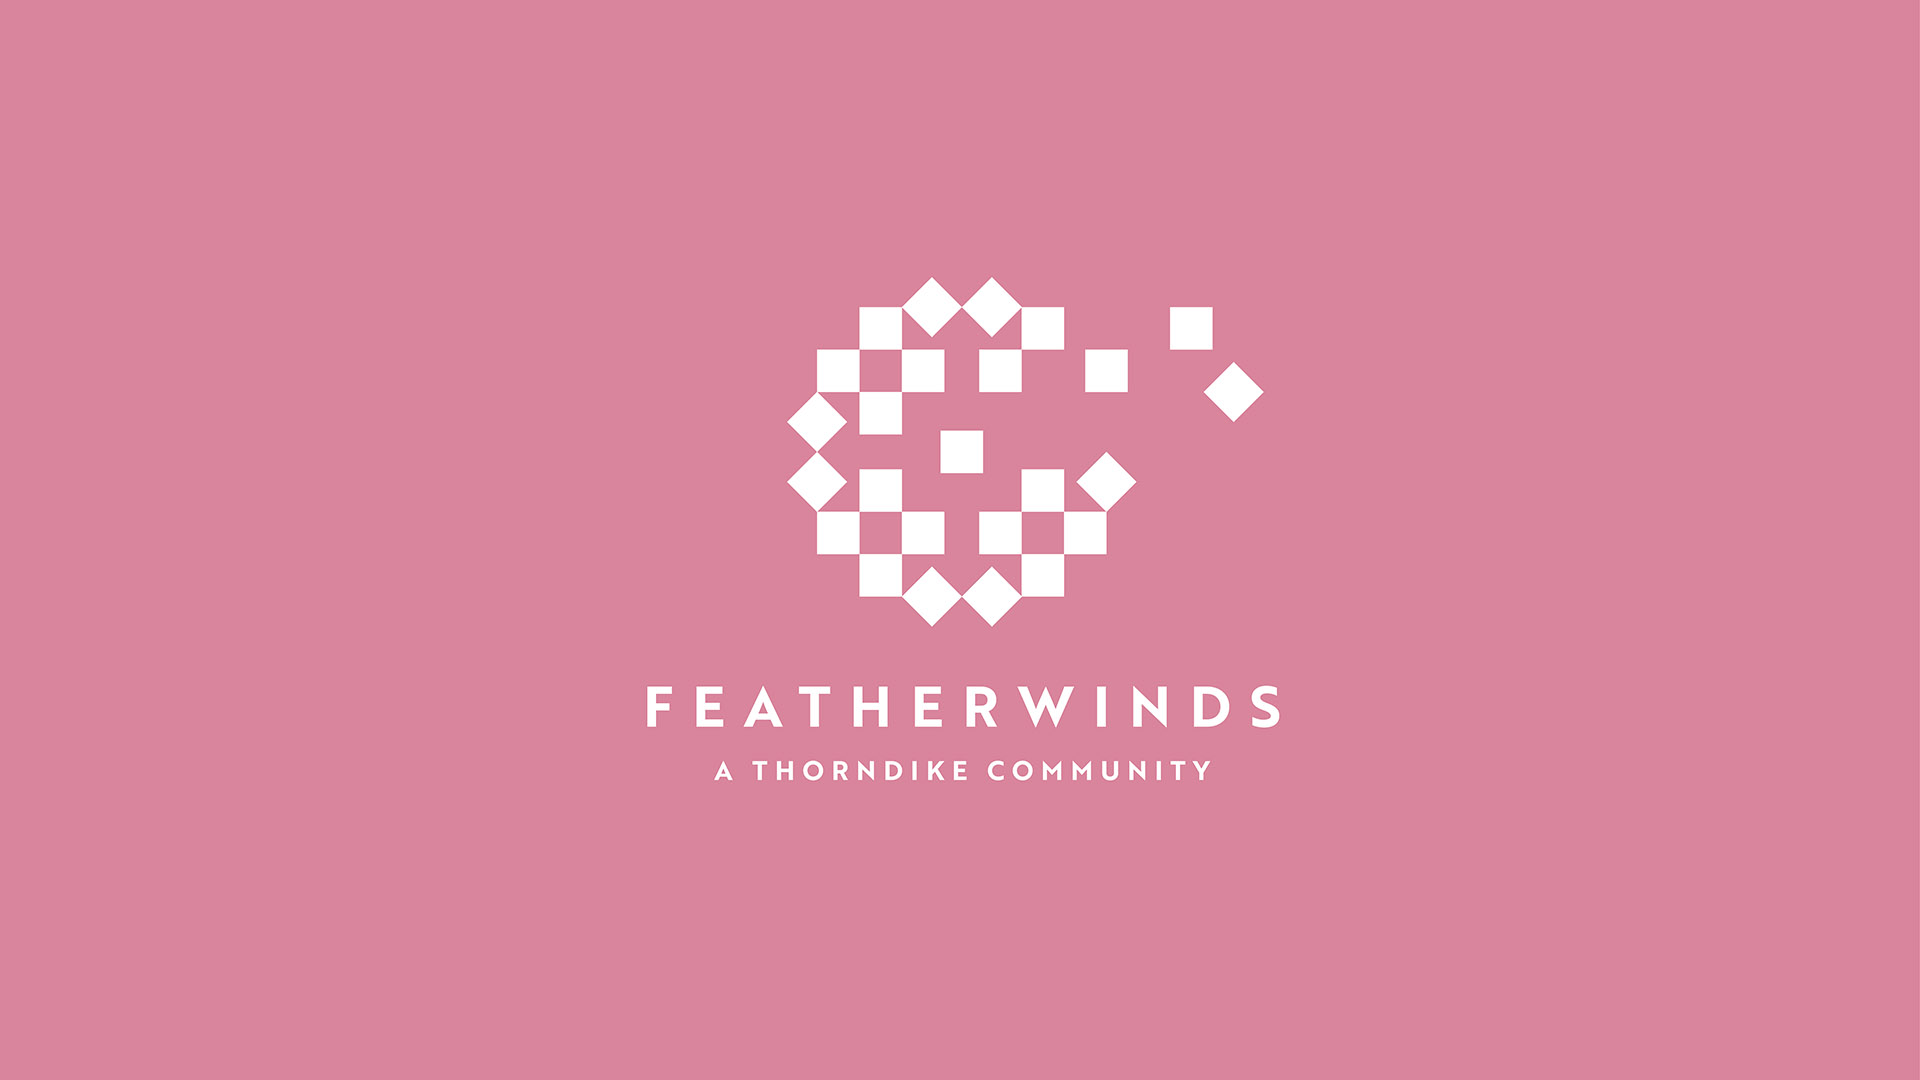 featherwinds white logo on pink